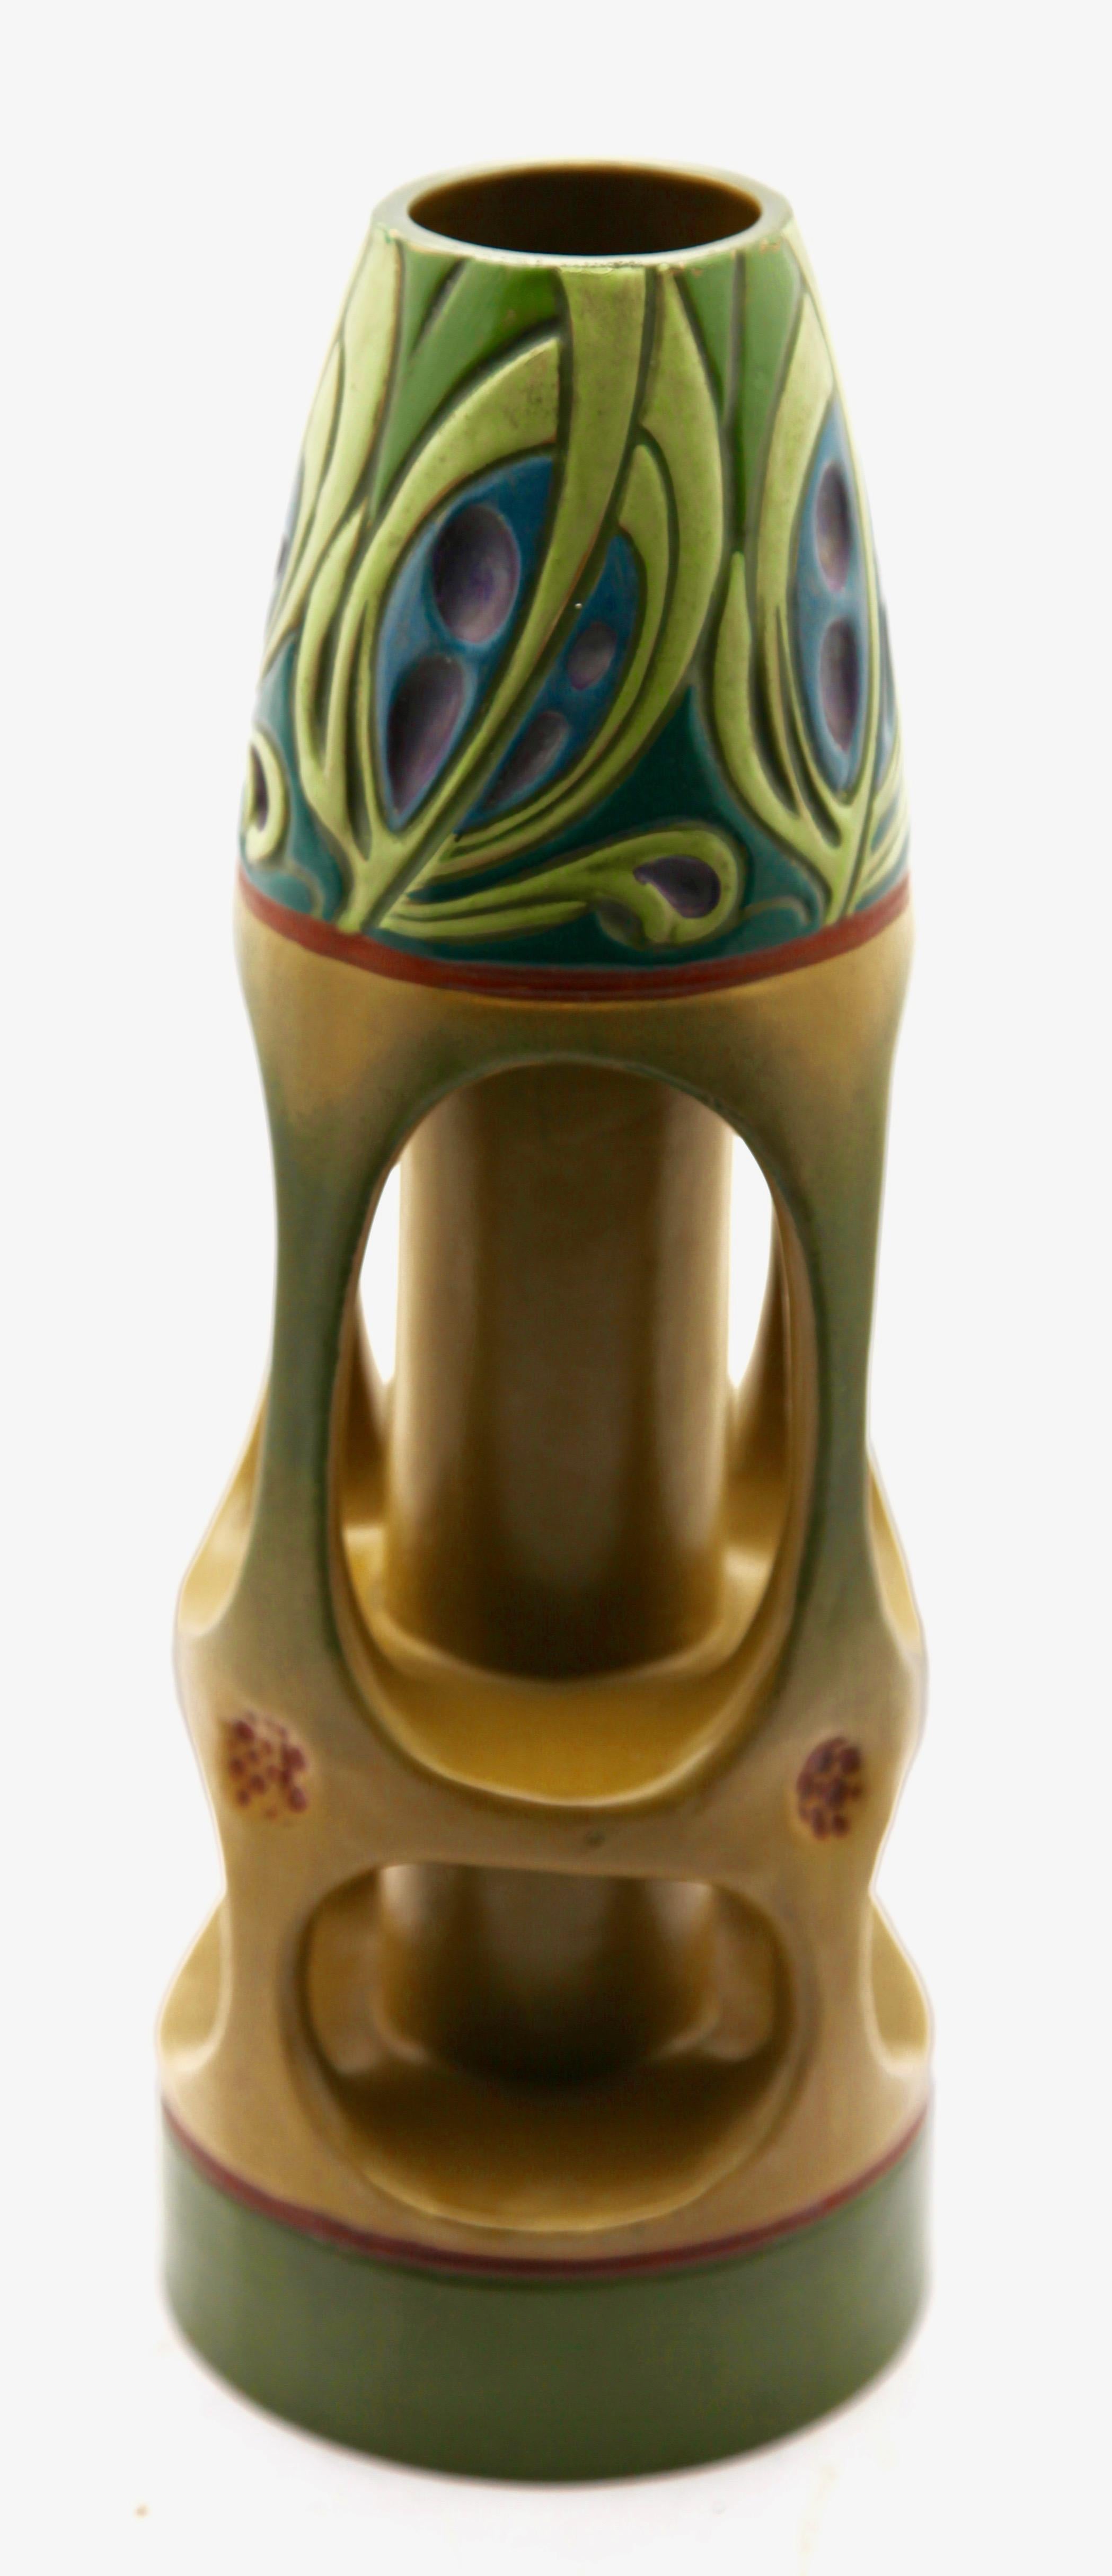 Early 20th Century Pair of Art Nouveau Vases, 'Amphora' by Julius Dressler, Vienna, circa 1905